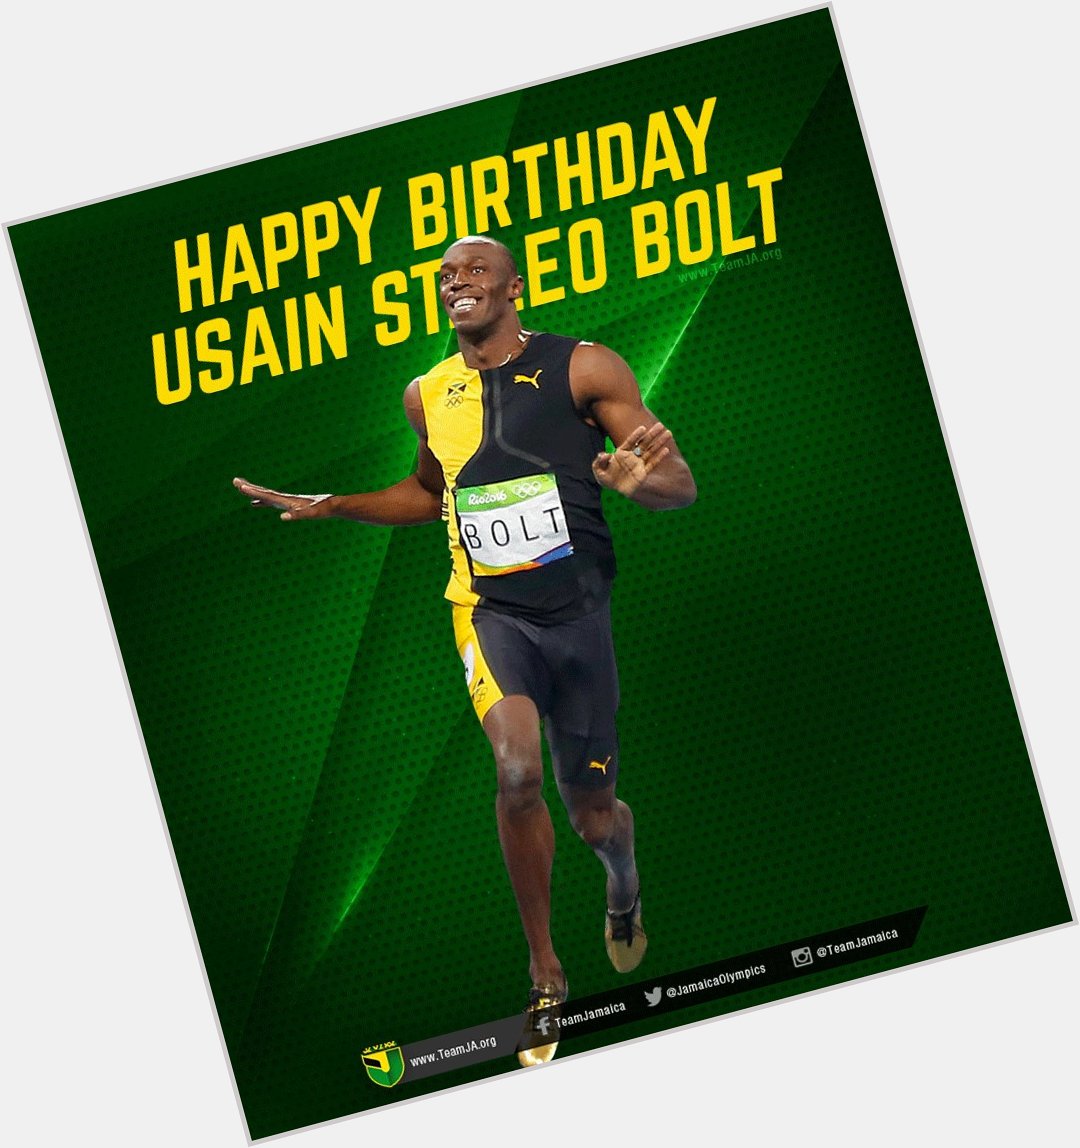 Happy 31st Birthday   Usain Bolt OJ, CD    ! We hope you having a blast! One Love! ~TeamJamaica 